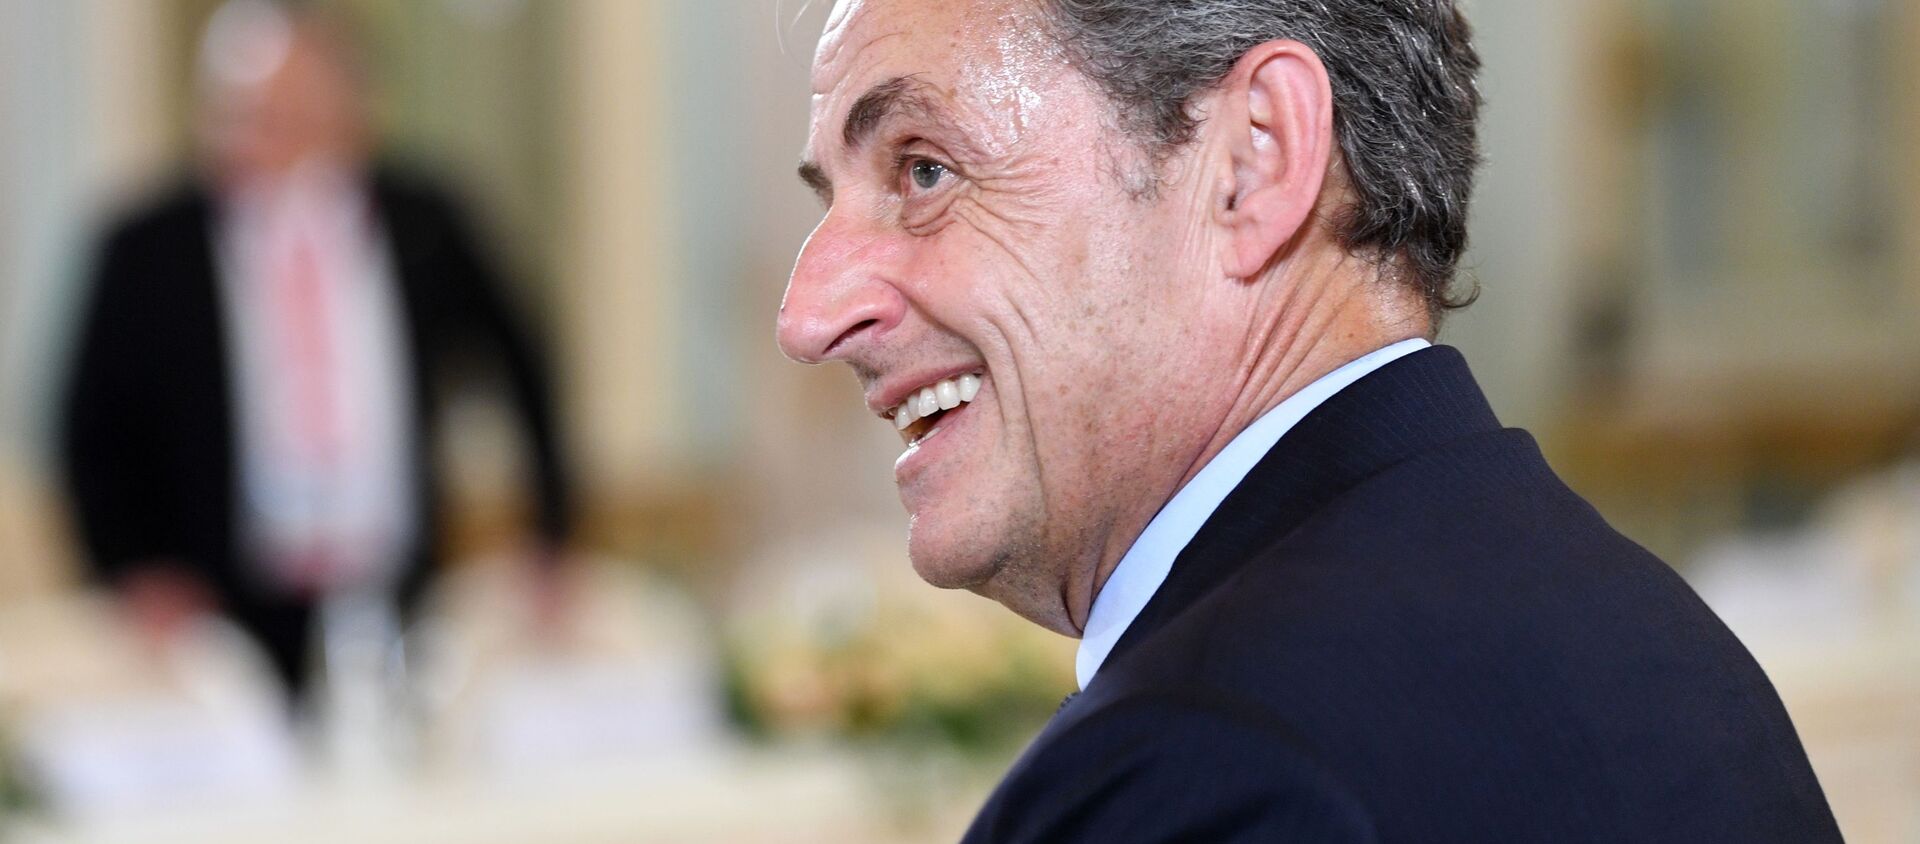  Бывший президент Франции Николя Саркози - Sputnik Таджикистан, 1920, 28.11.2019